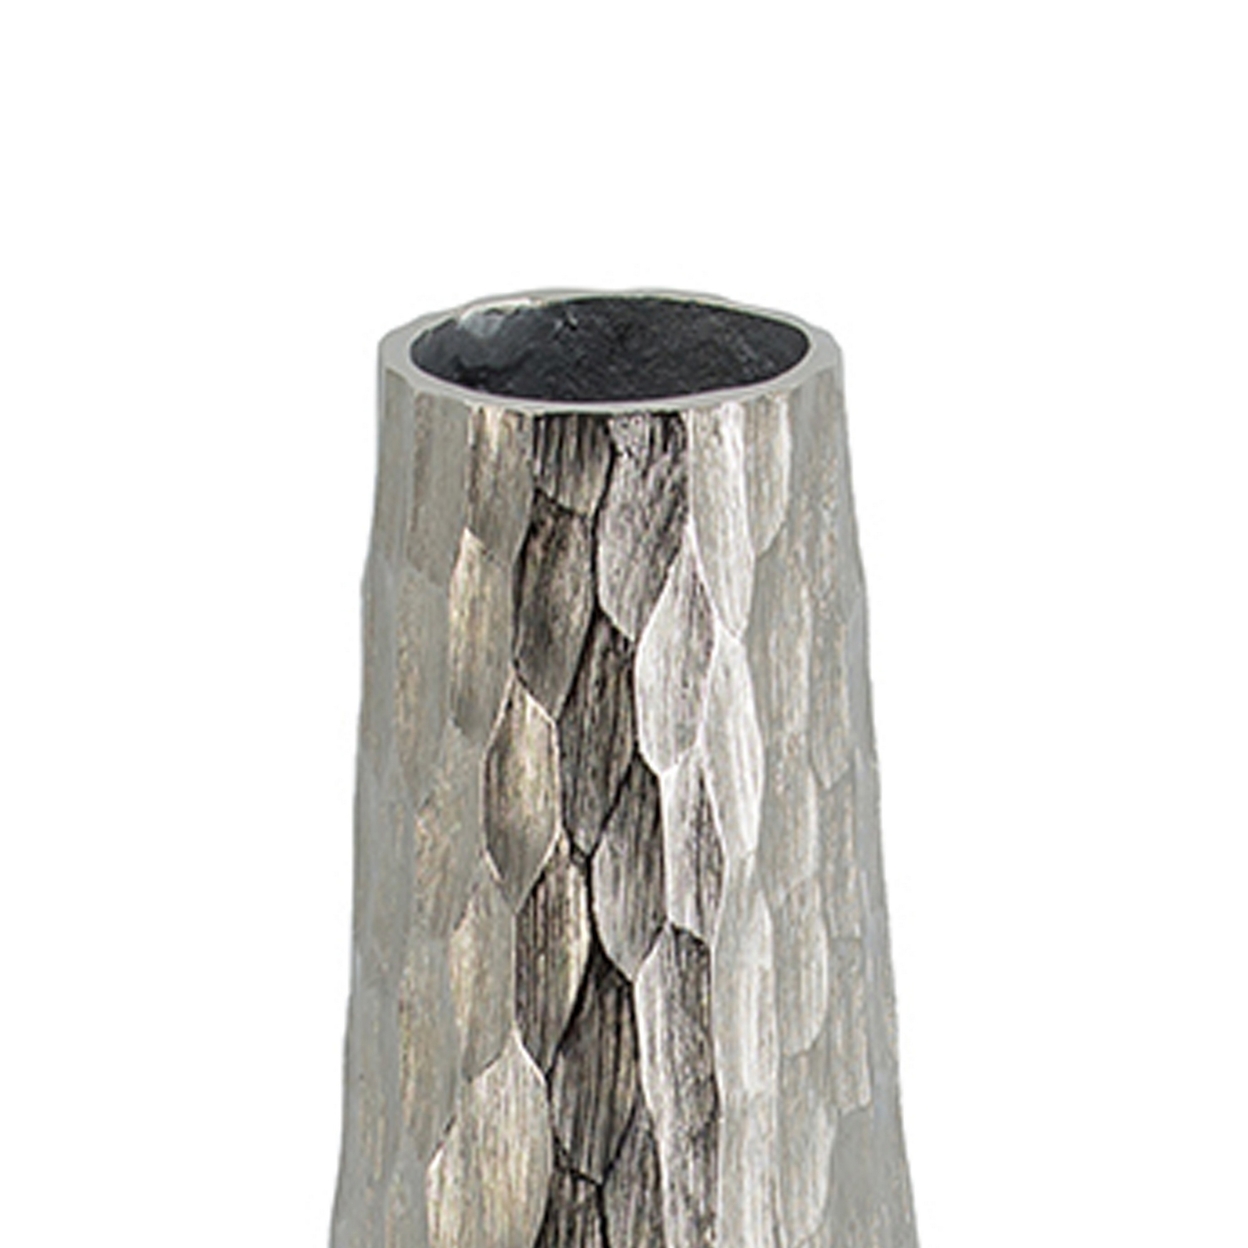 19 Inch Contemporary Tall Oblong Vase, Silver Aluminum, Hammered Texture- Saltoro Sherpi